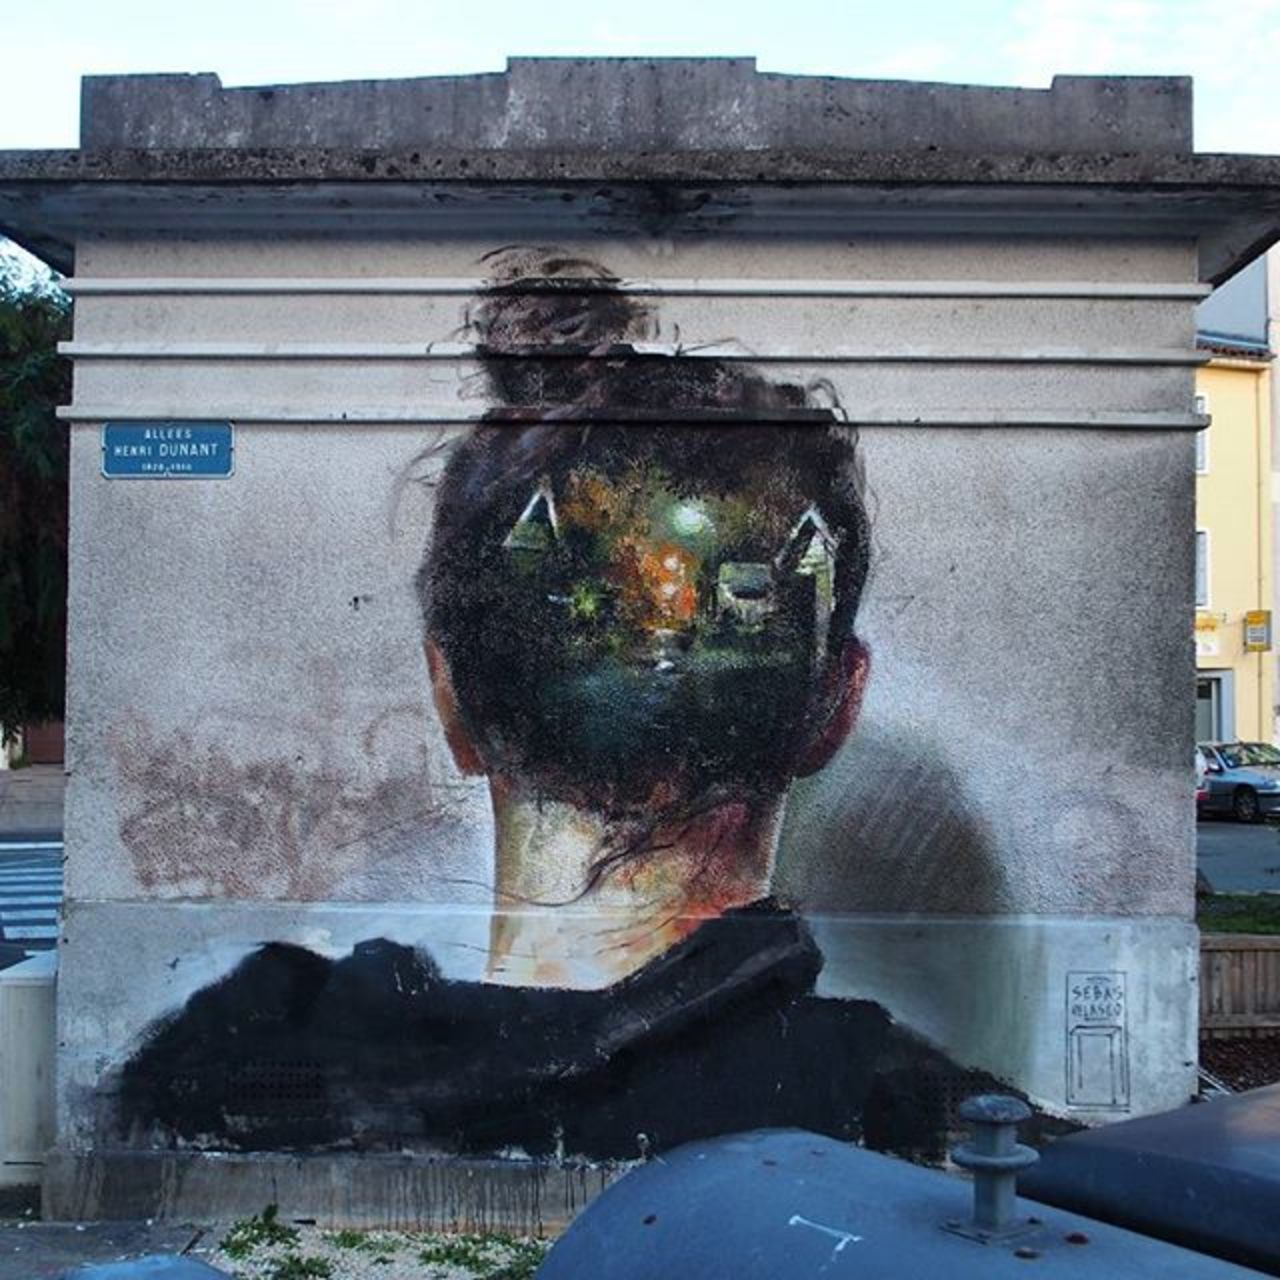 RT @cakozlem76: Sebasvelasco & manolo_mesa #streetart urbanart #graffiti https://t.co/OEC2npid5W